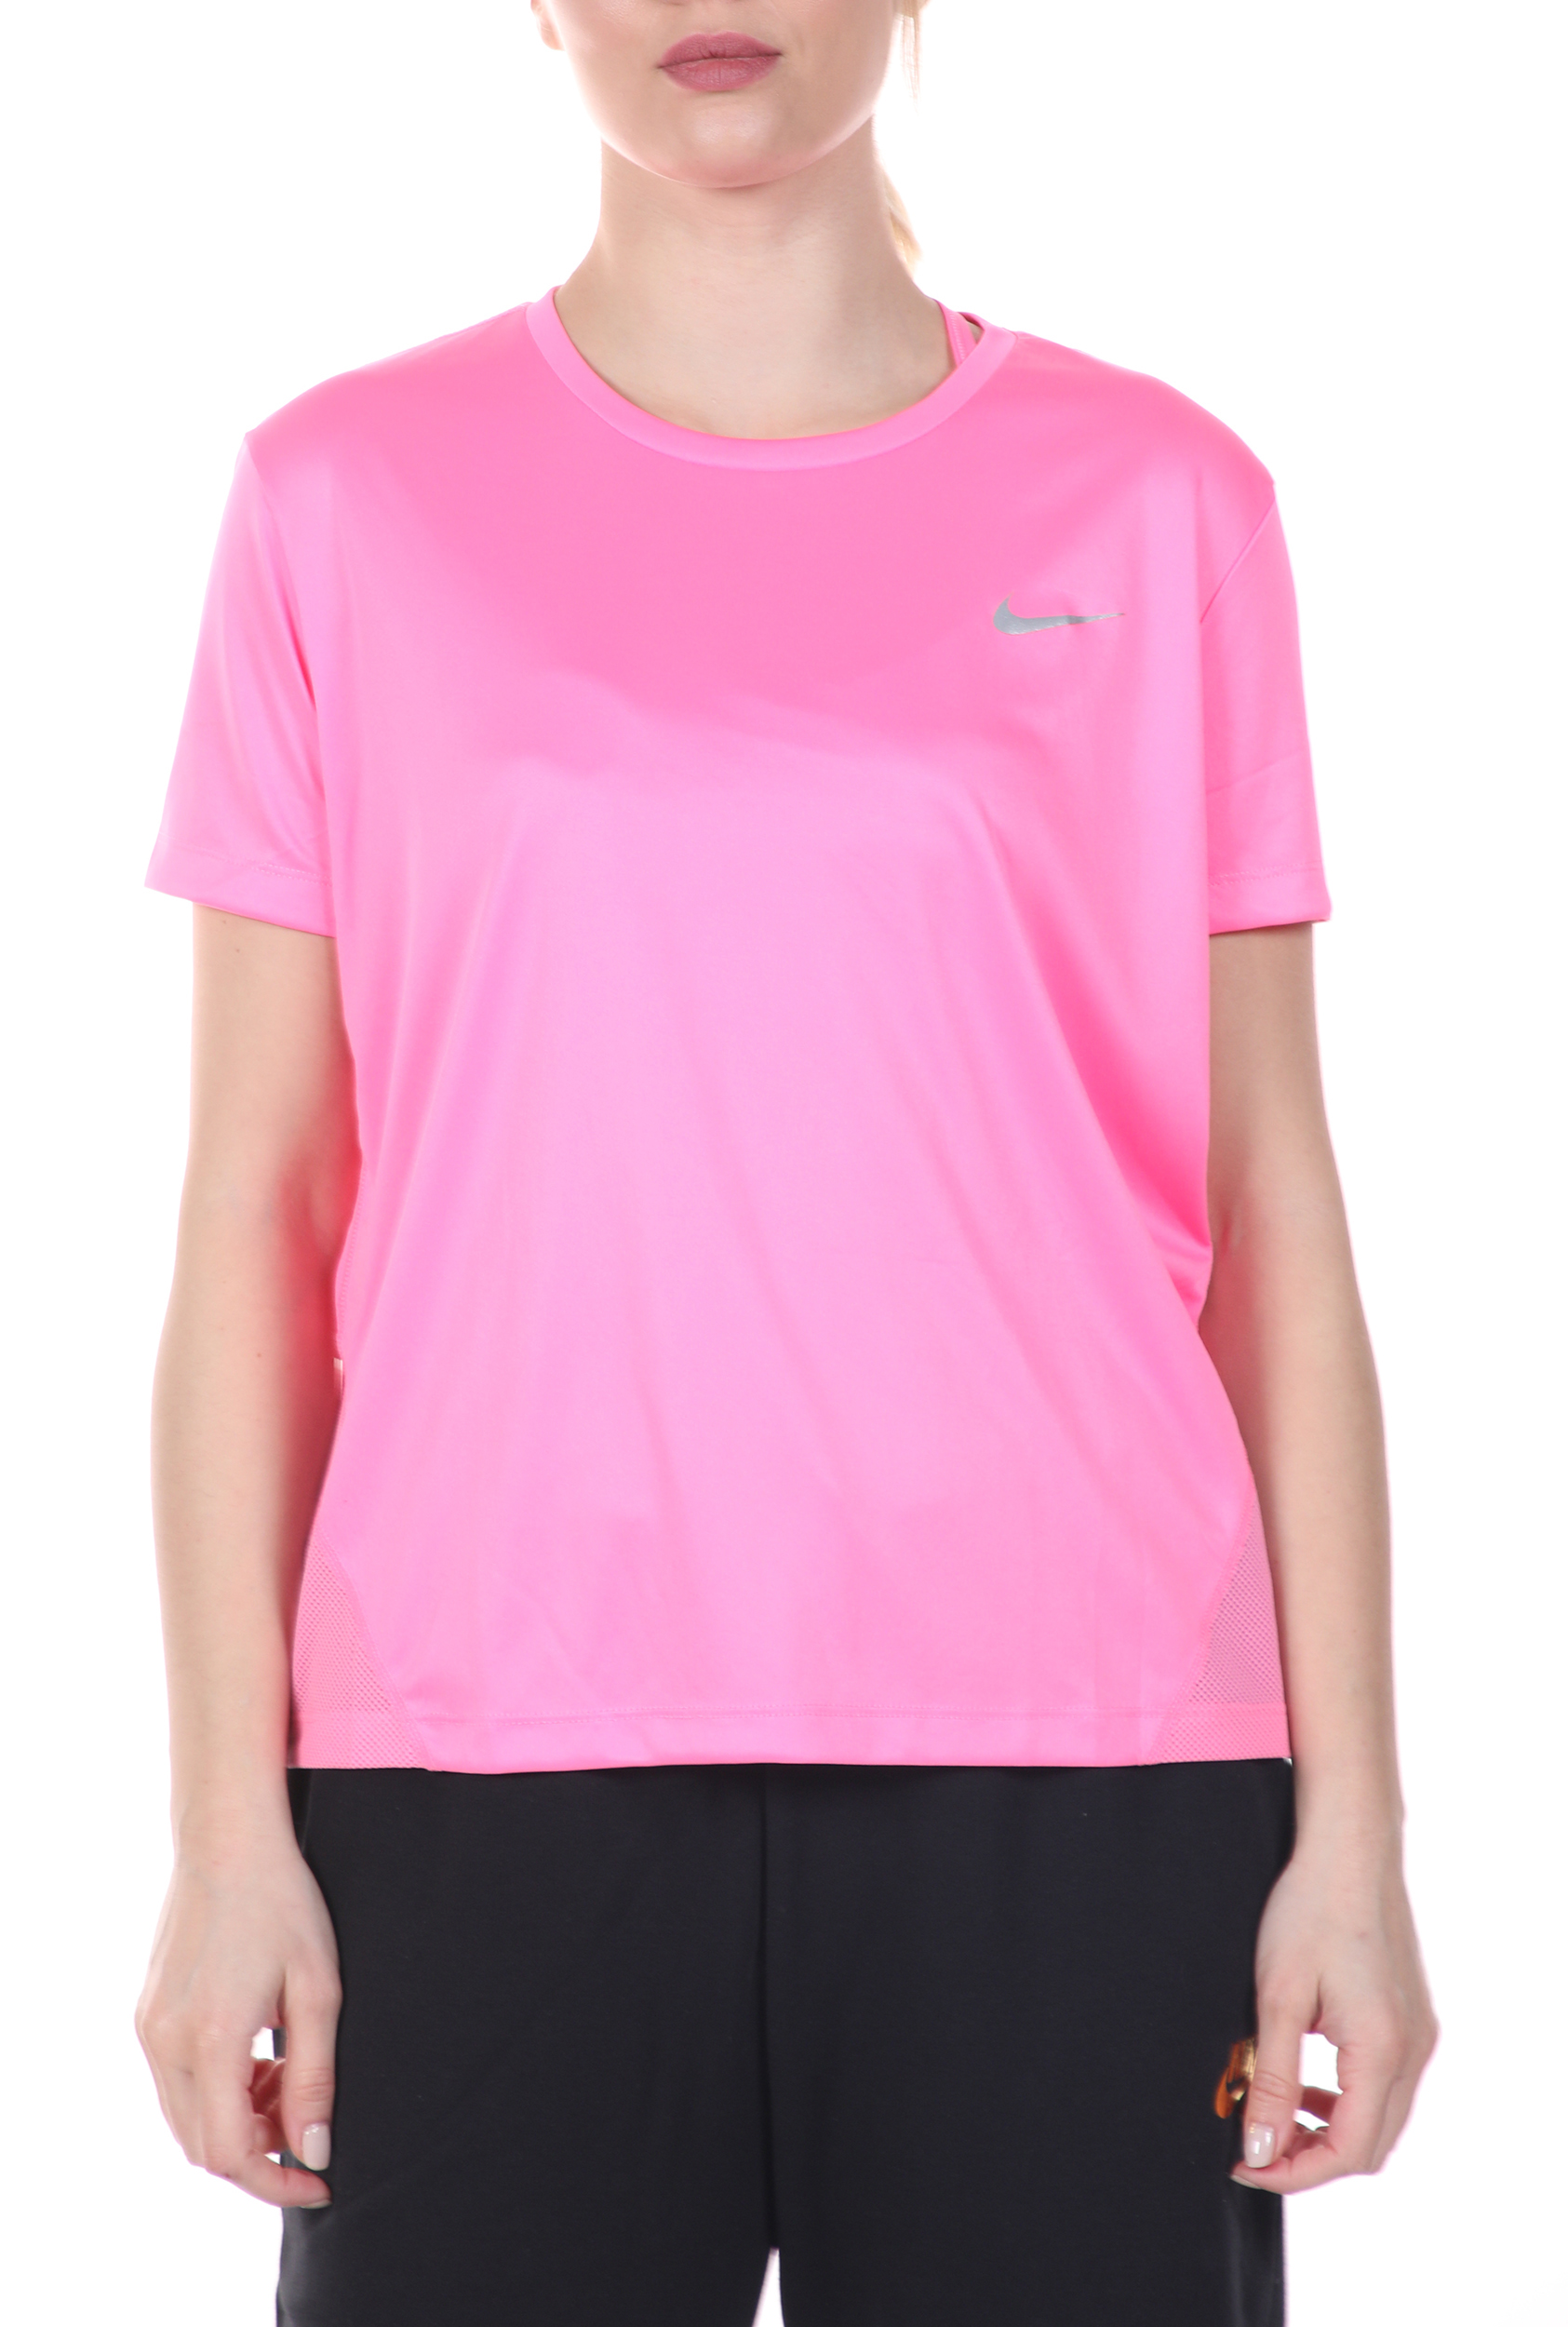 NIKE – Γυναικεία μπλούζα NIKE MILER TOP SS ροζ